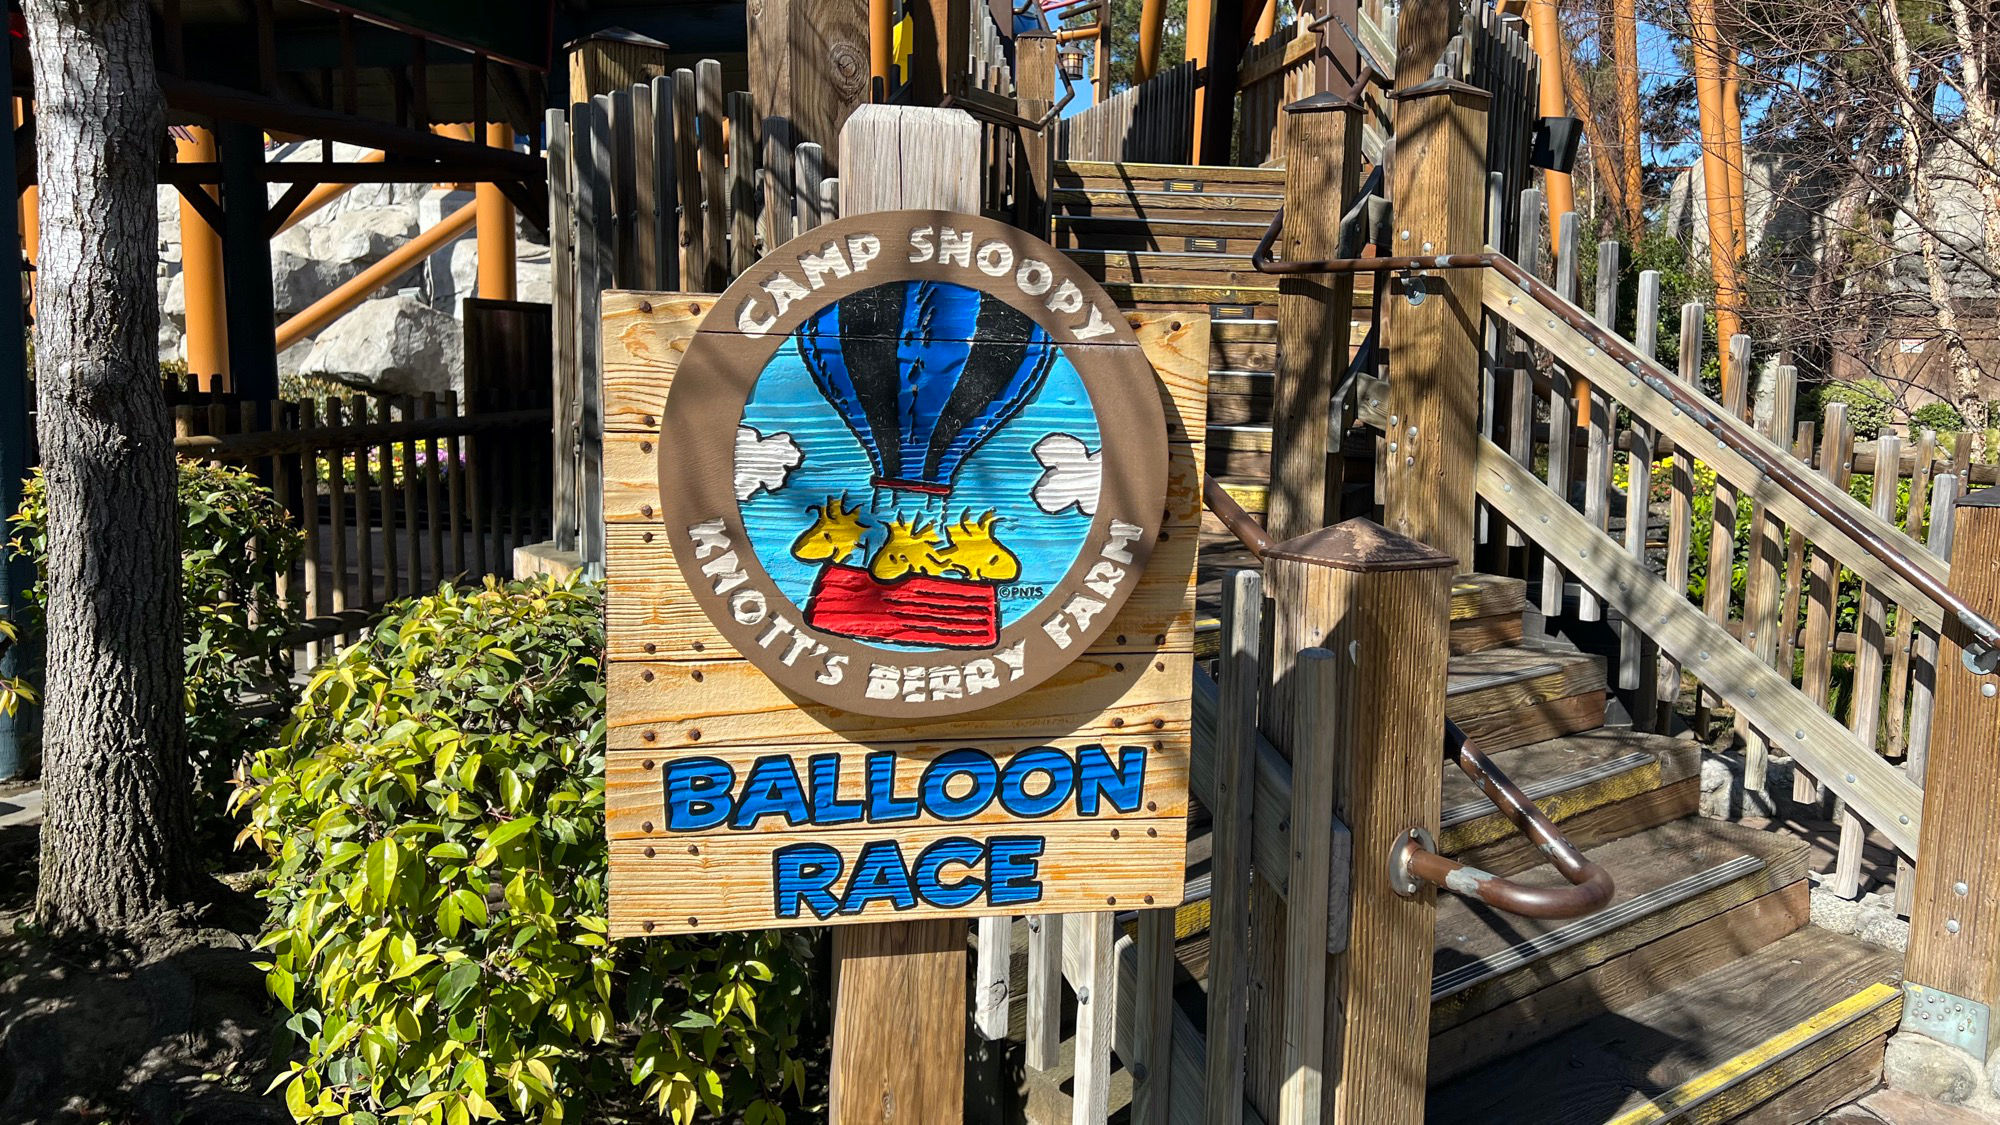 Camp Snoopy Balloon Race